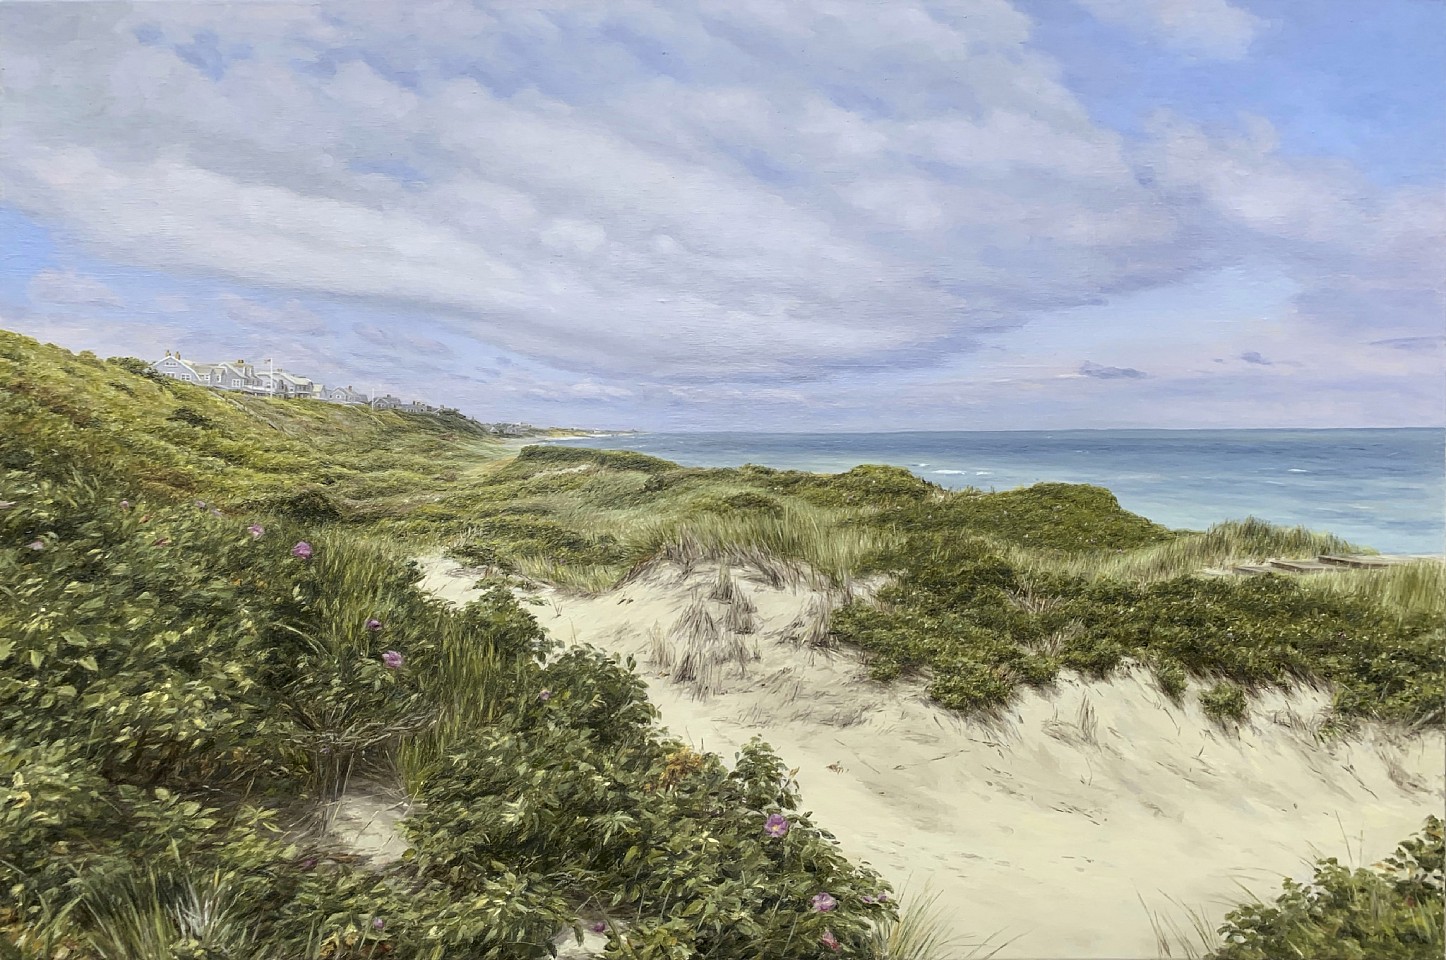 Lori Zummo, Steps Beach Skyline, 2019
oil on canvas, 24 x 36 in. (61 x 91.4 cm)
LZ190601